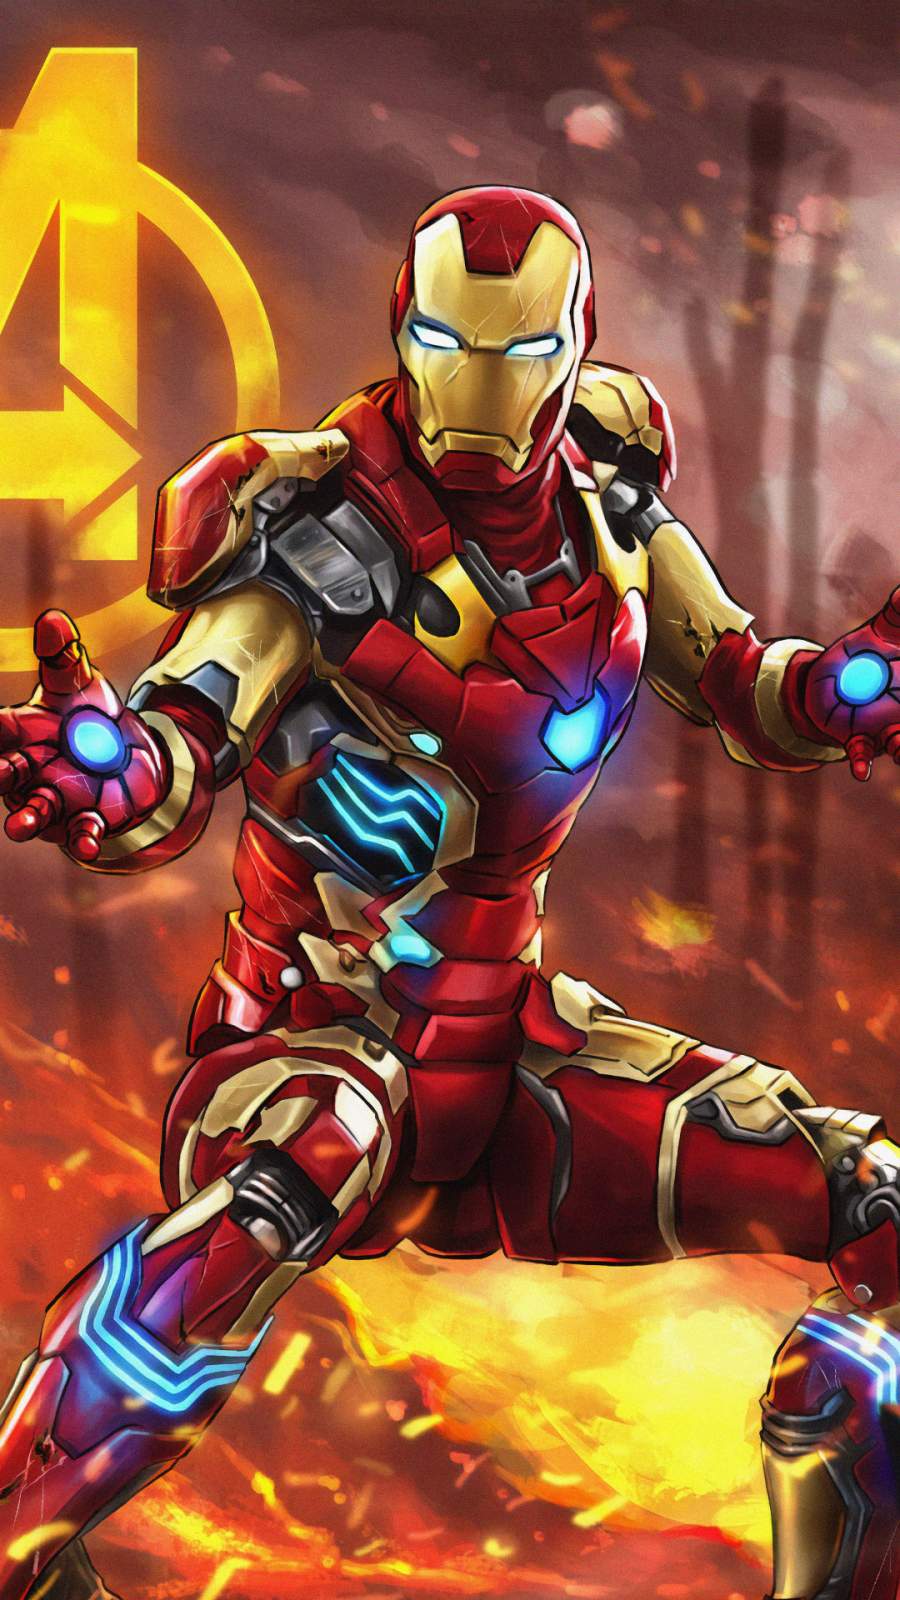 The Iron Man Art IPhone Wallpaper - IPhone Wallpapers : iPhone Wallpapers